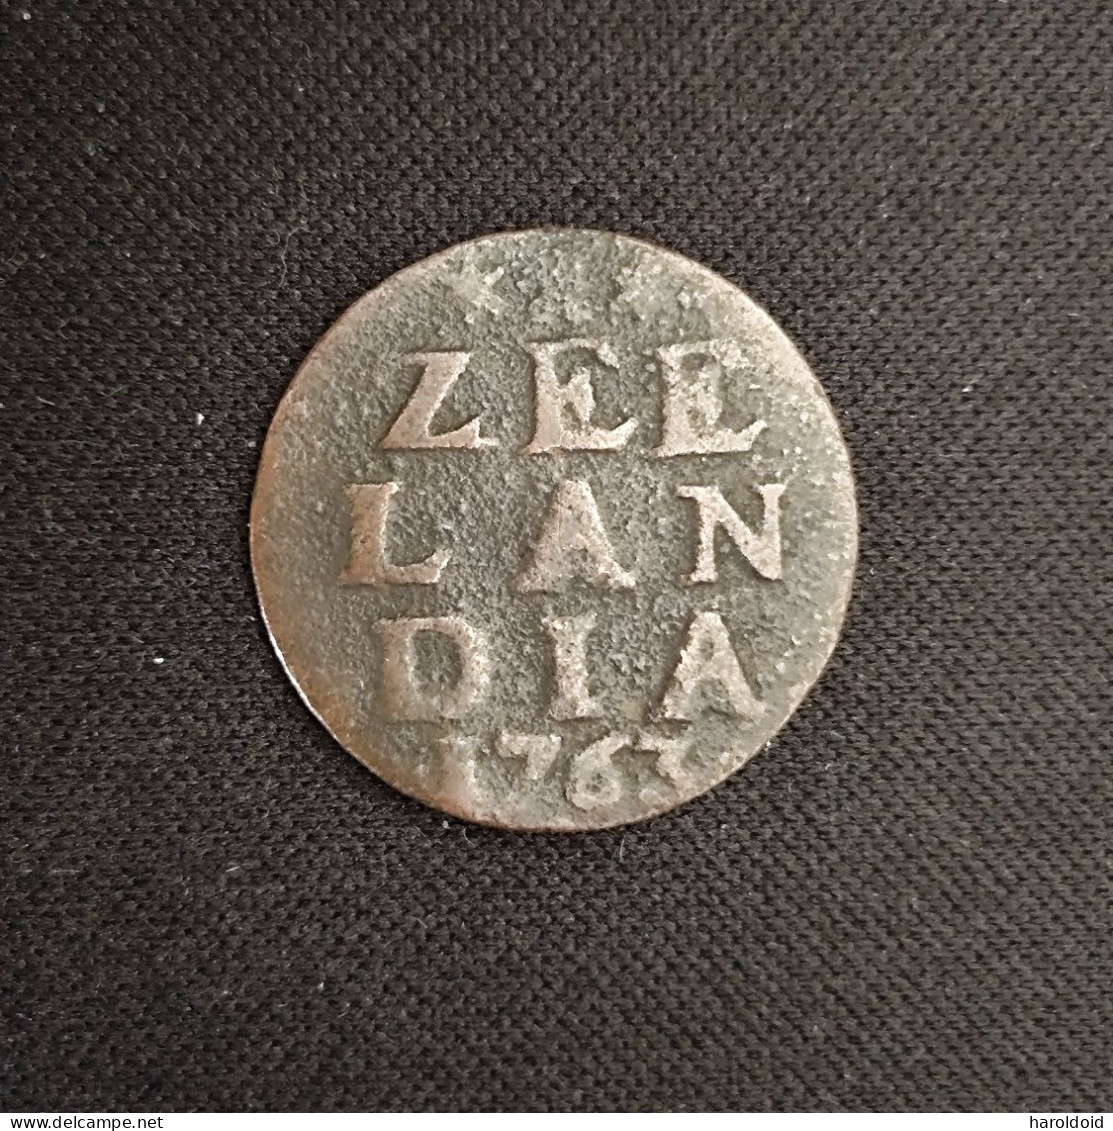 PAYS BAS - ZEELAND - 1/2 DUIT 1763 - …-1795 : Oude Periode